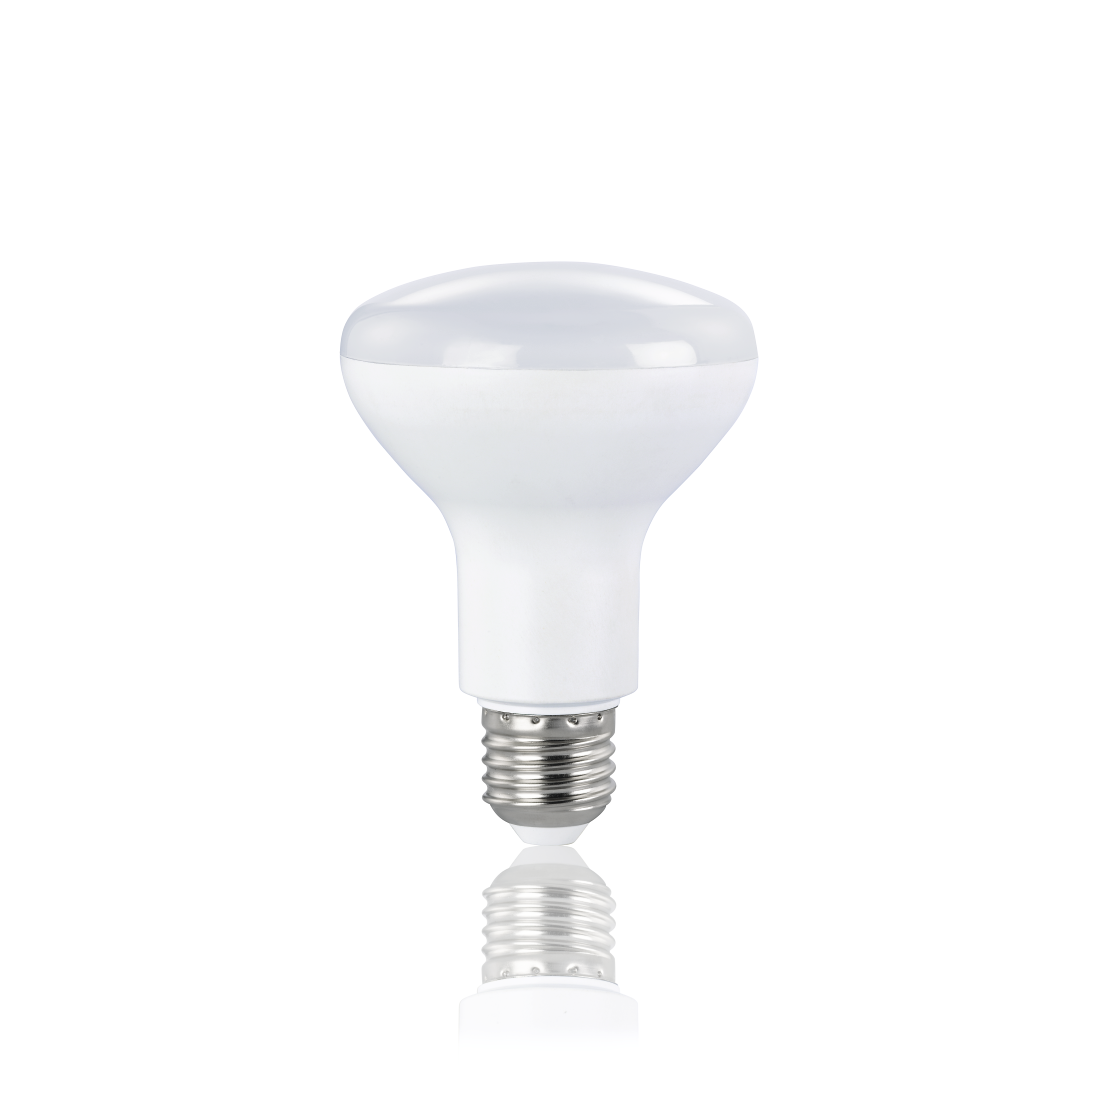 abx2 High-Res Image 2 - Xavax, LED Bulb, E27, 1050 lm Replaces 75 W, Reflector Bulb R80, warm white